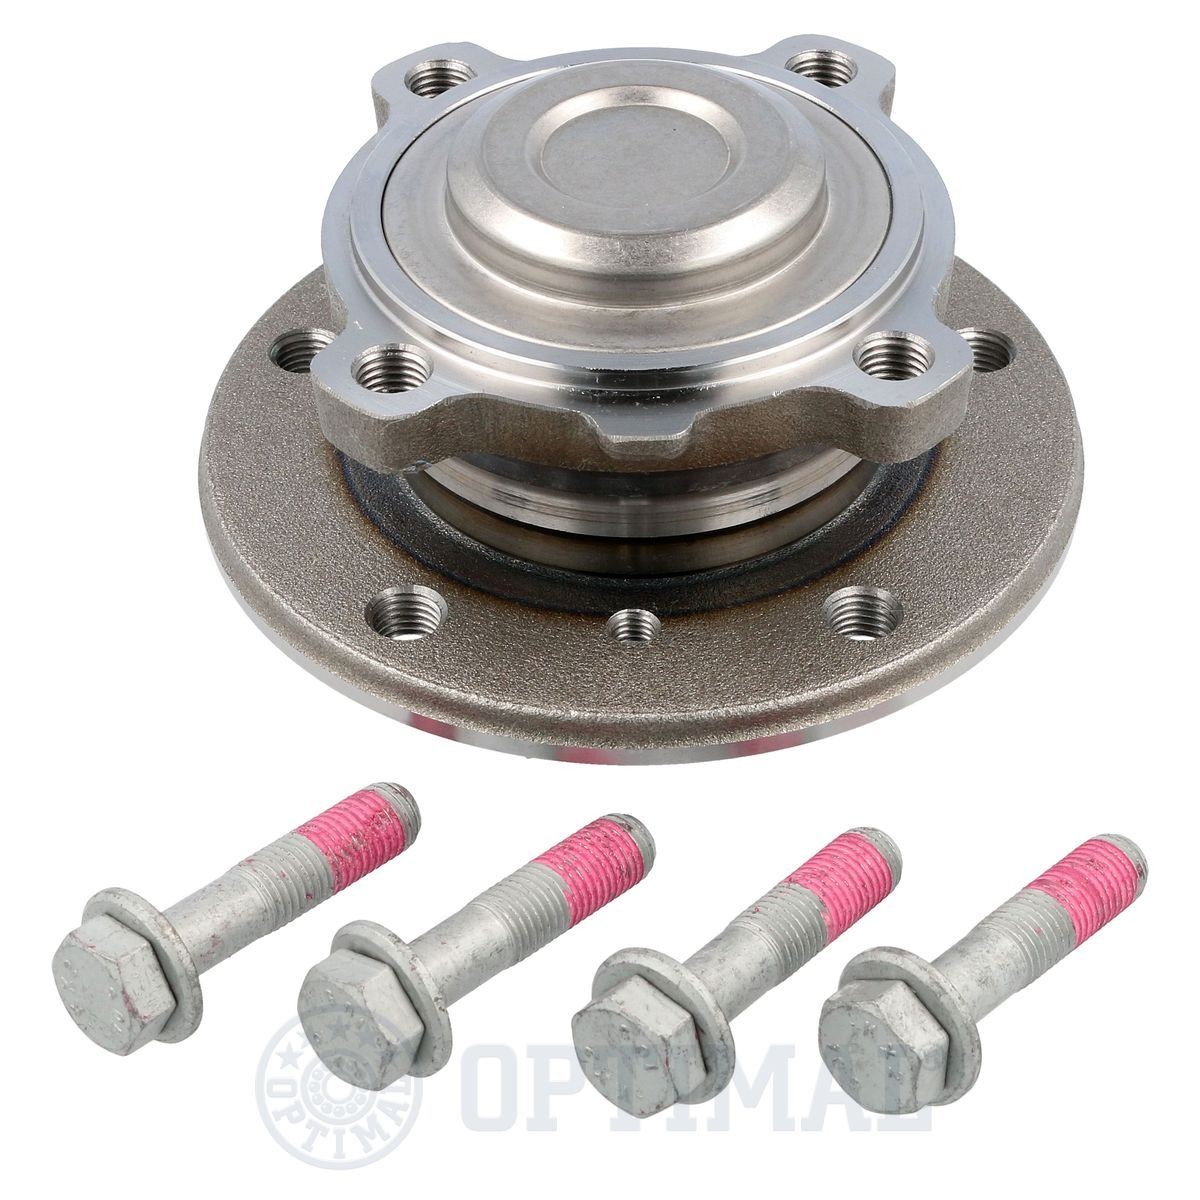 OPTIMAL 501513 Wheel bearing kit with integrated magnetic sensor ring, 143 mm